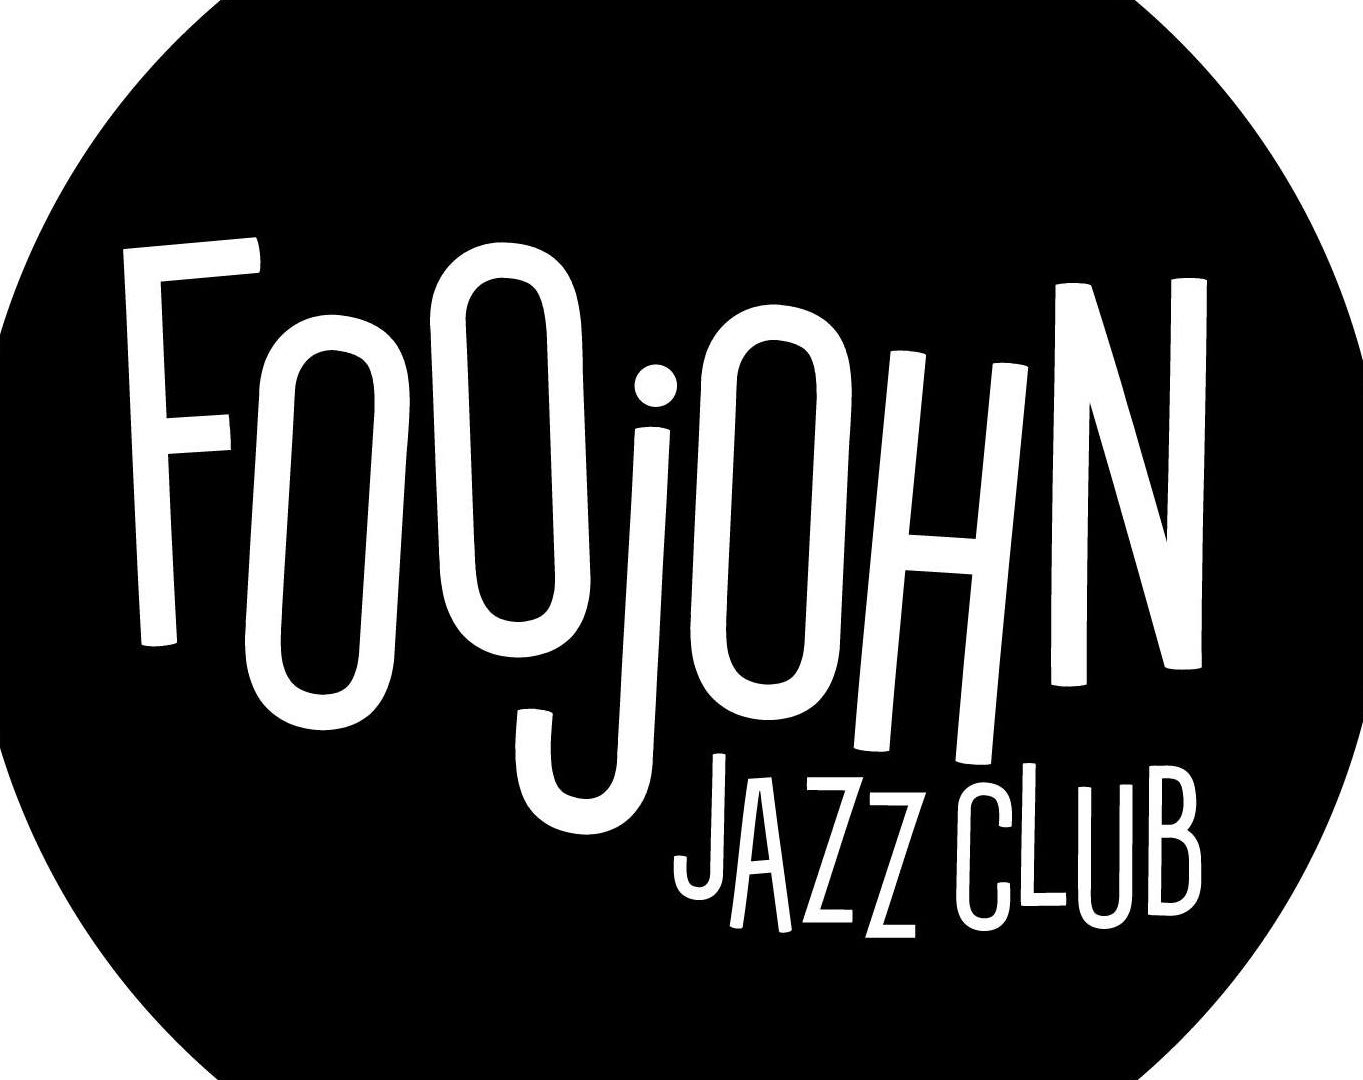 Foojohn jazz club